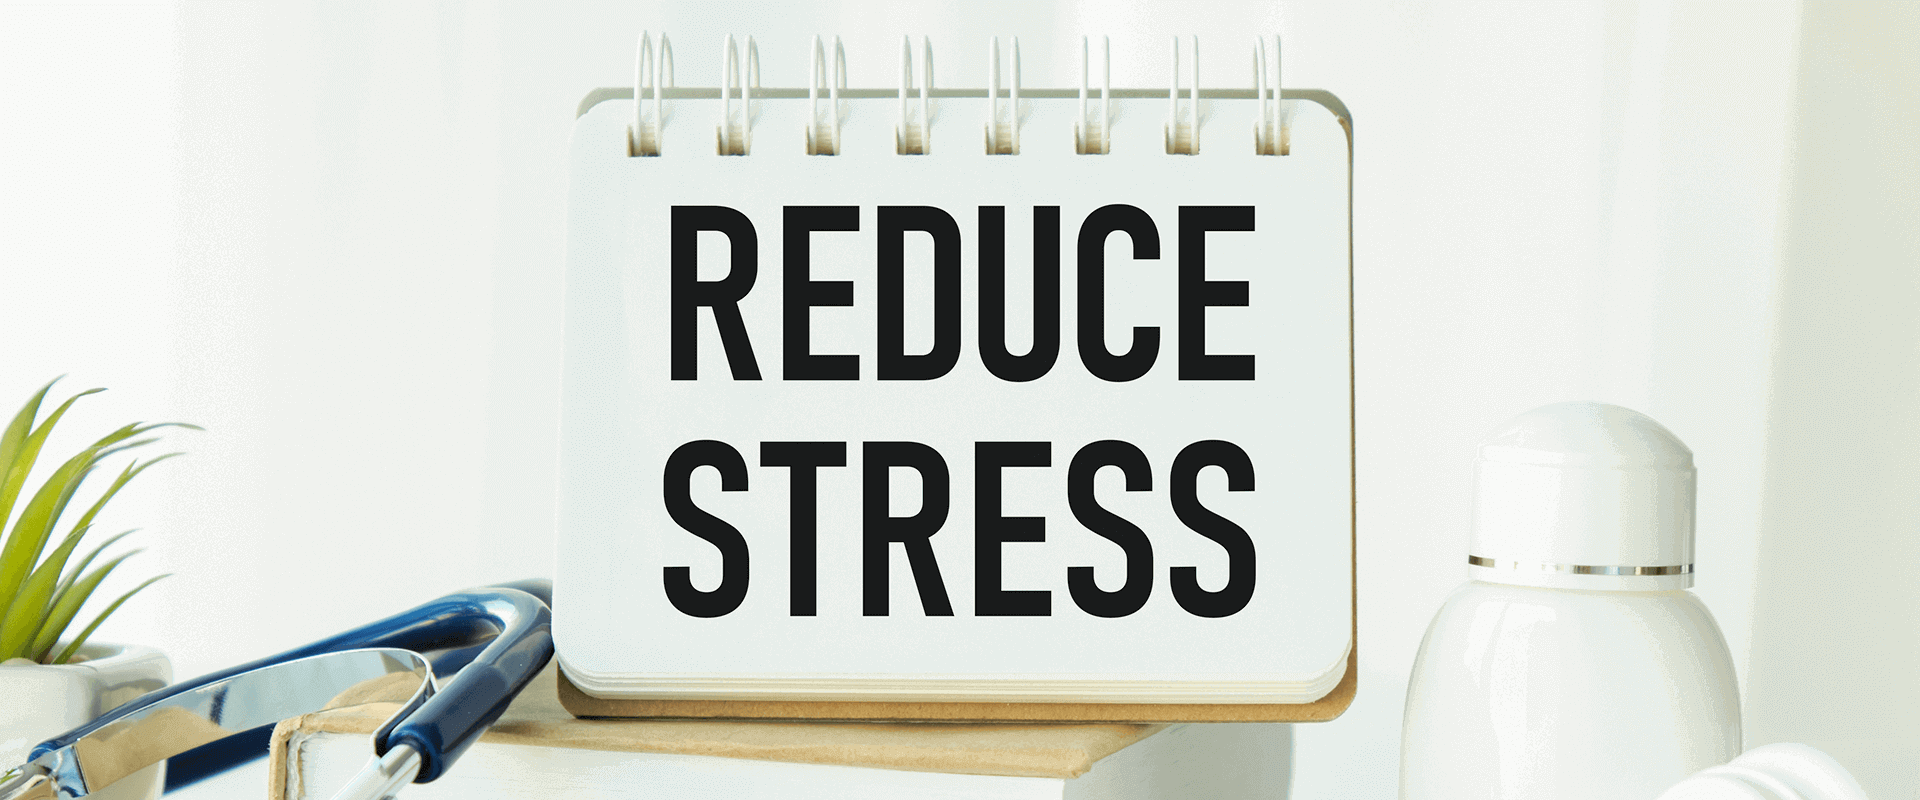 Reduce stress